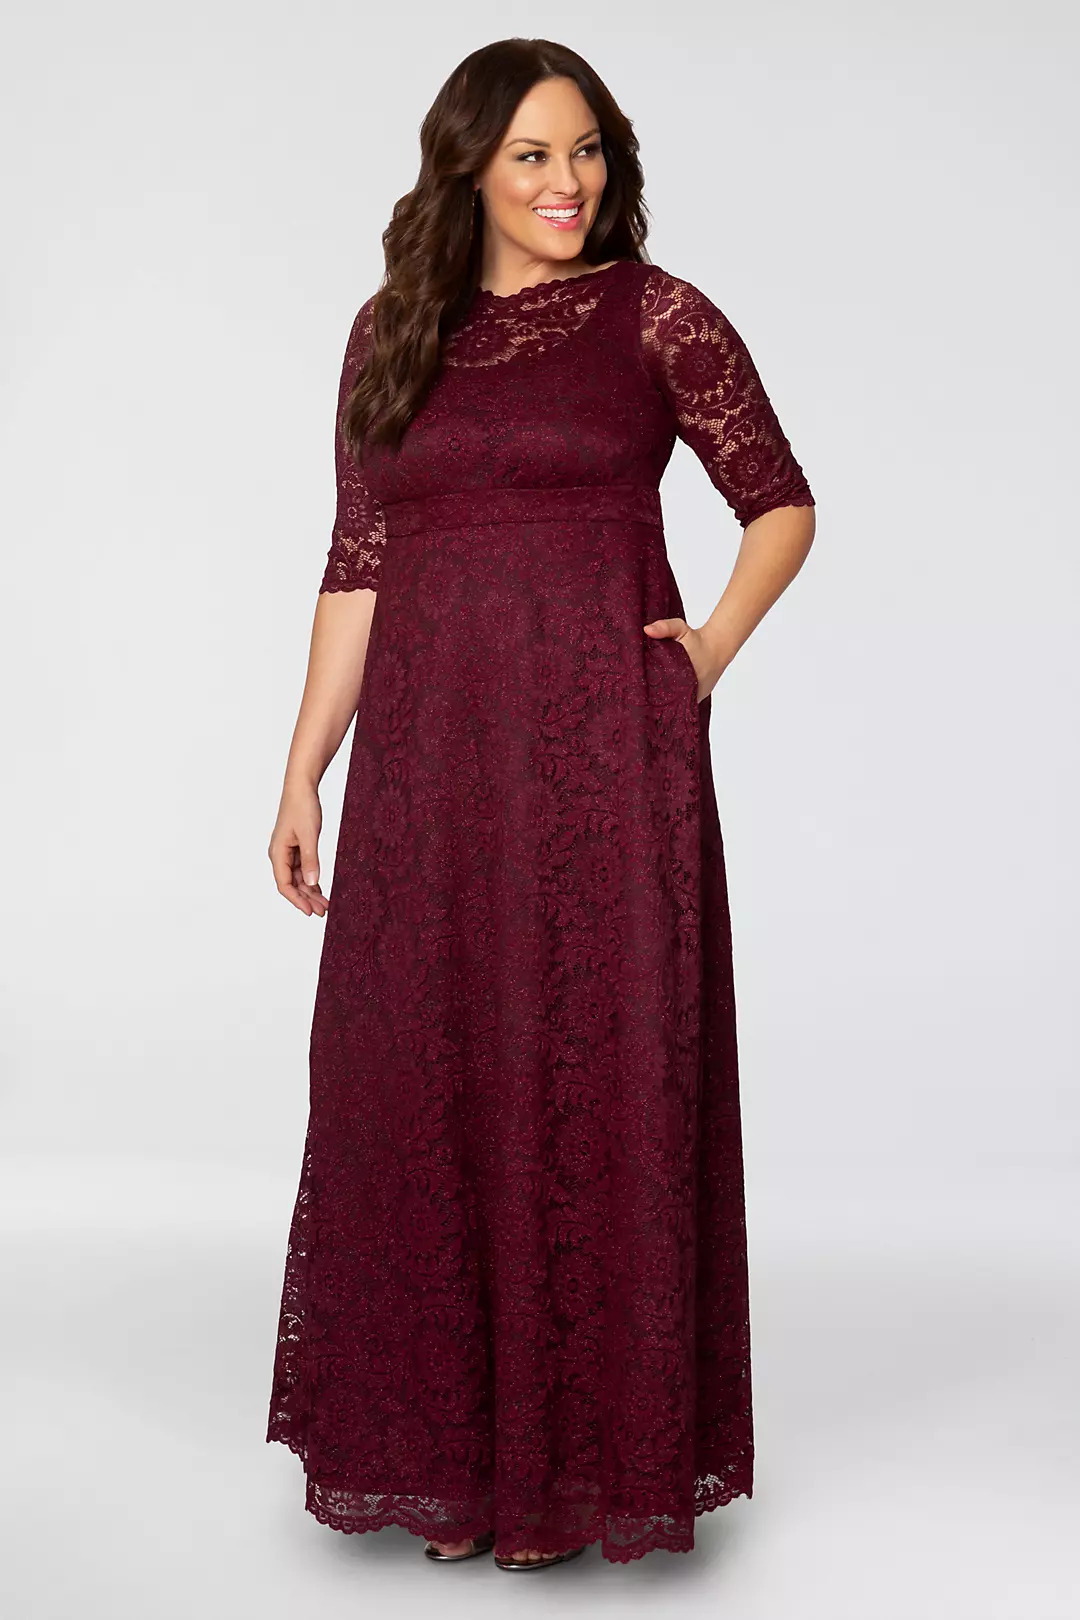 Leona Glitter Lace A-Line Plus Size Gown Image